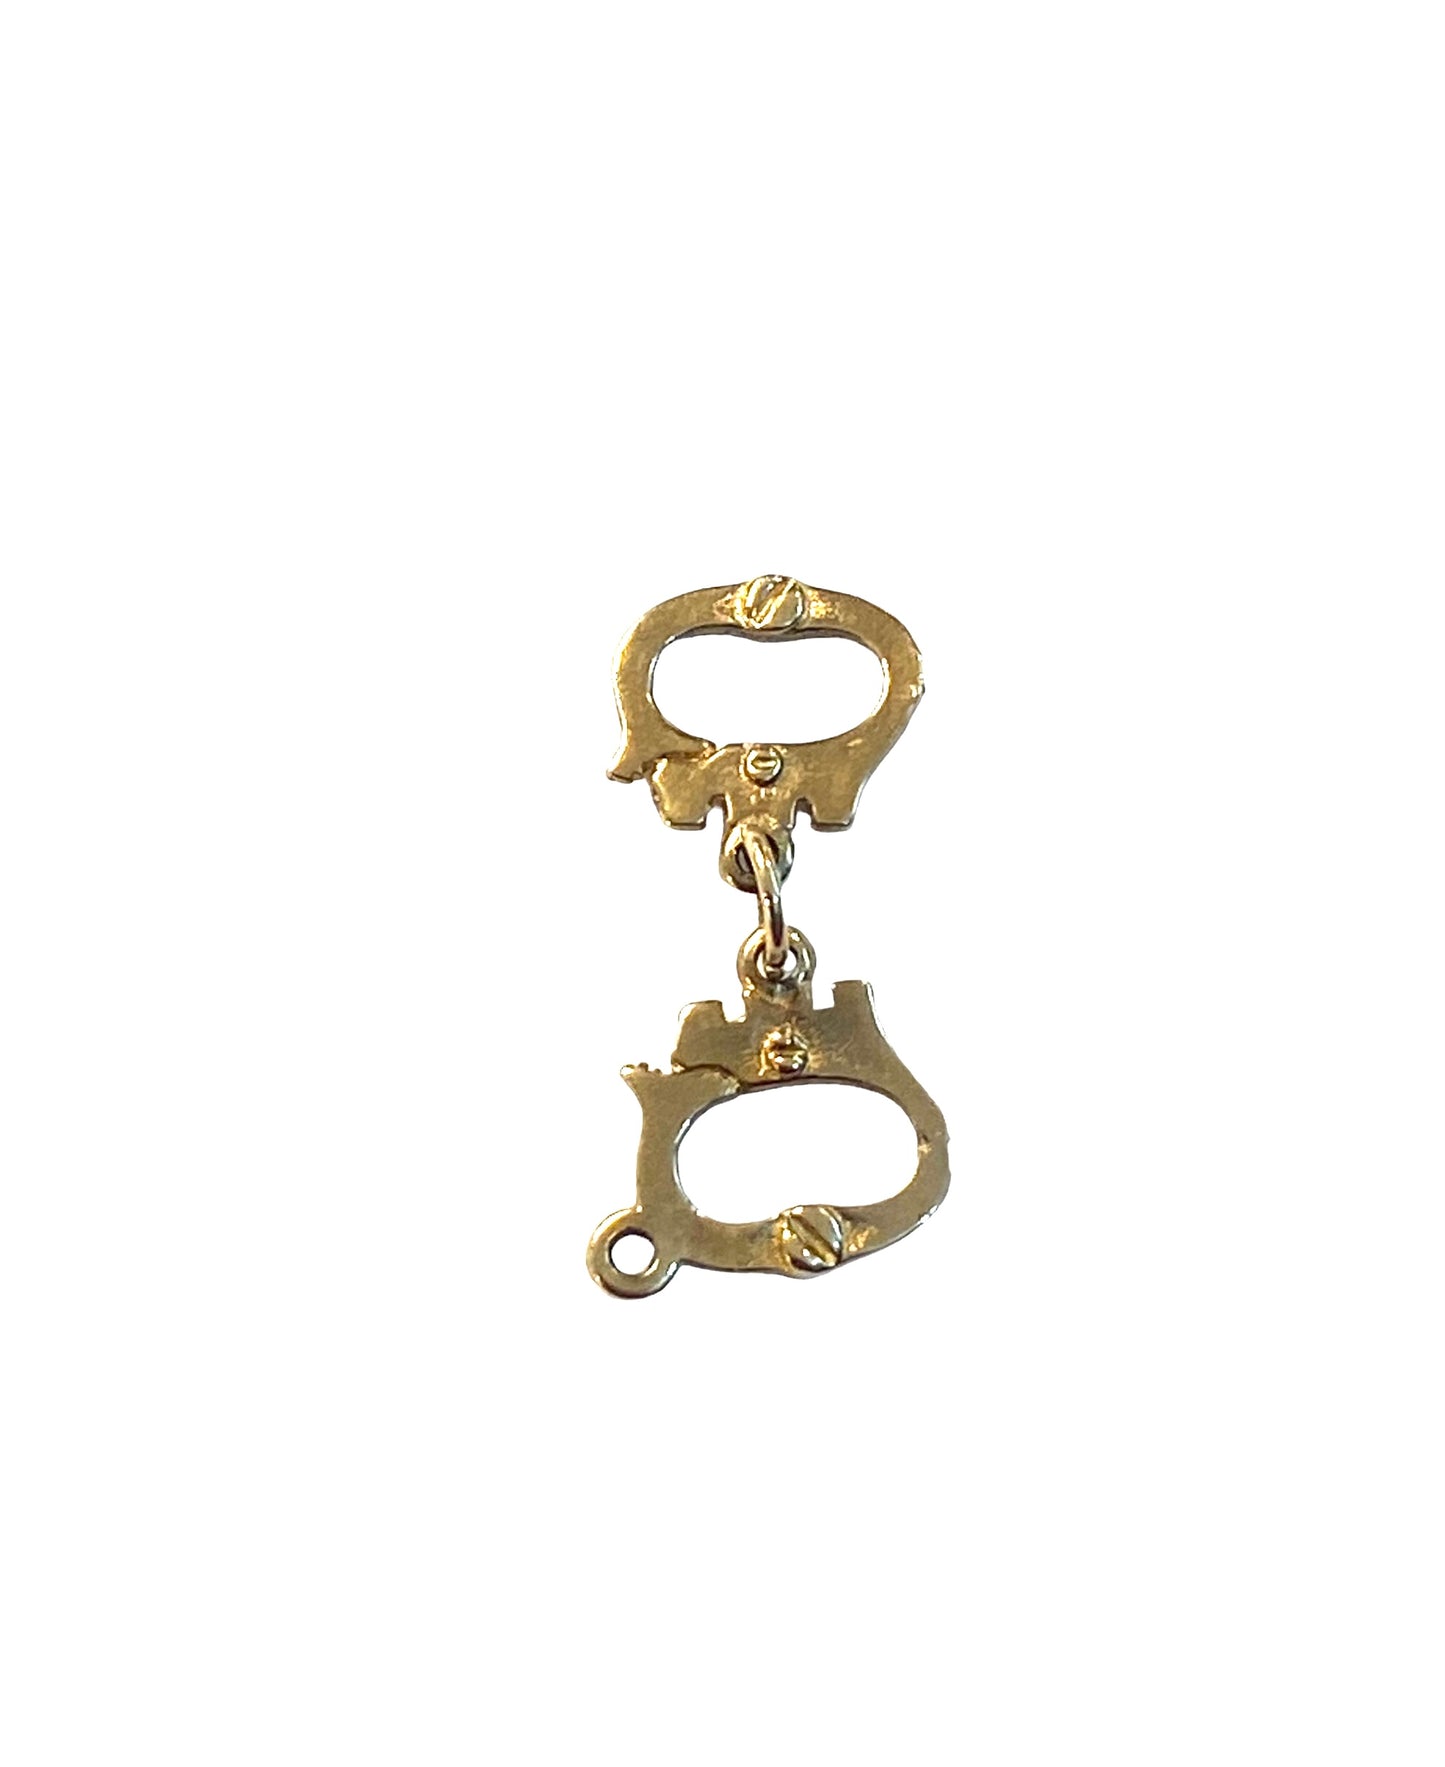 9ct vintage handcuff charm